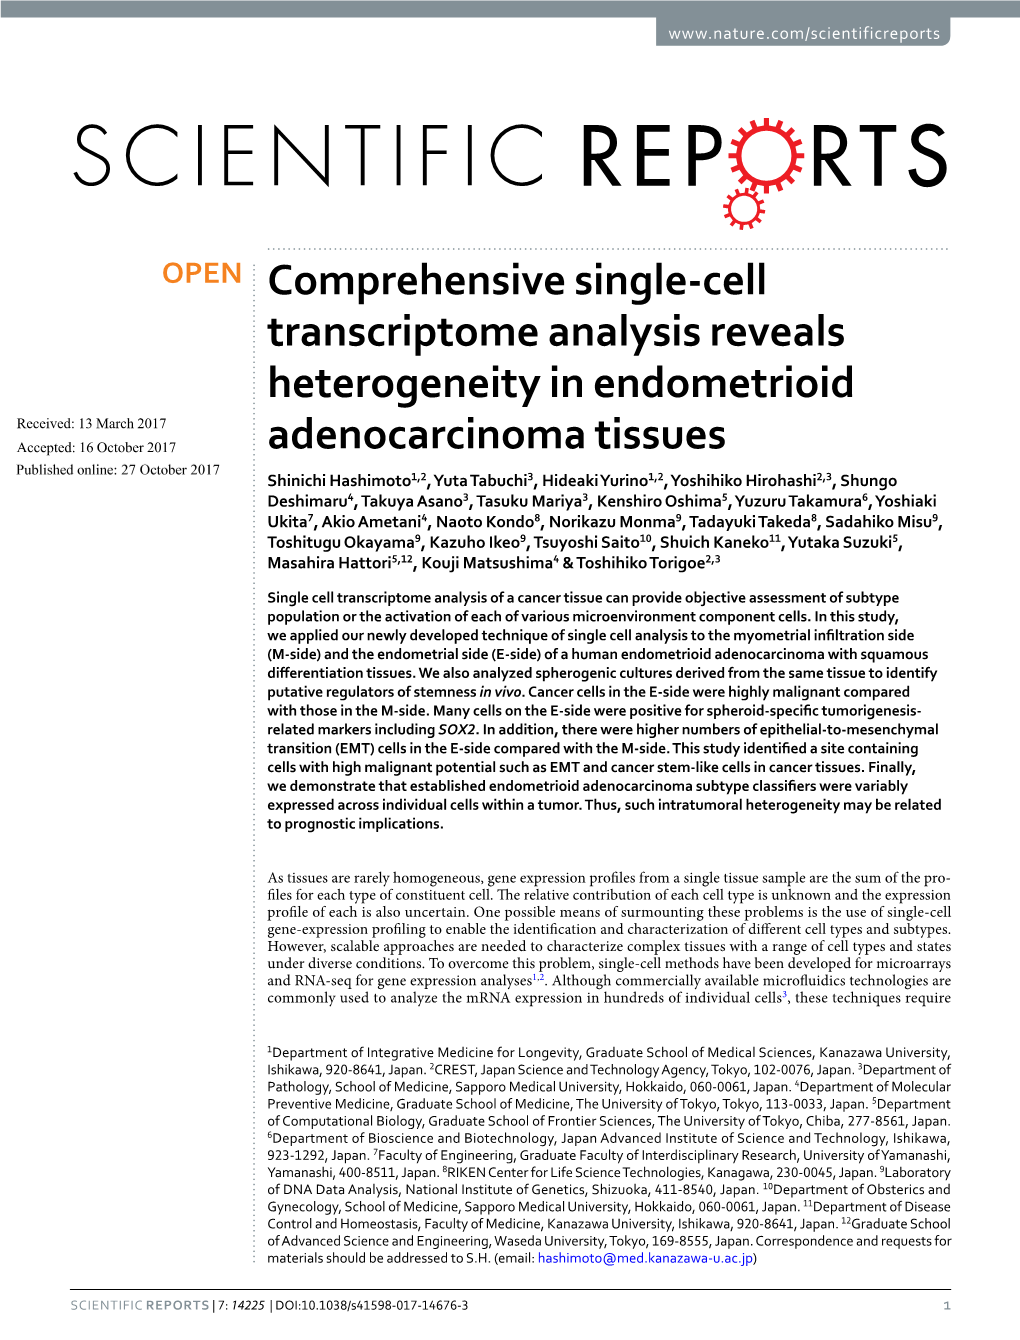 Comprehensive Single-Cell Transcriptome Analysis Reveals